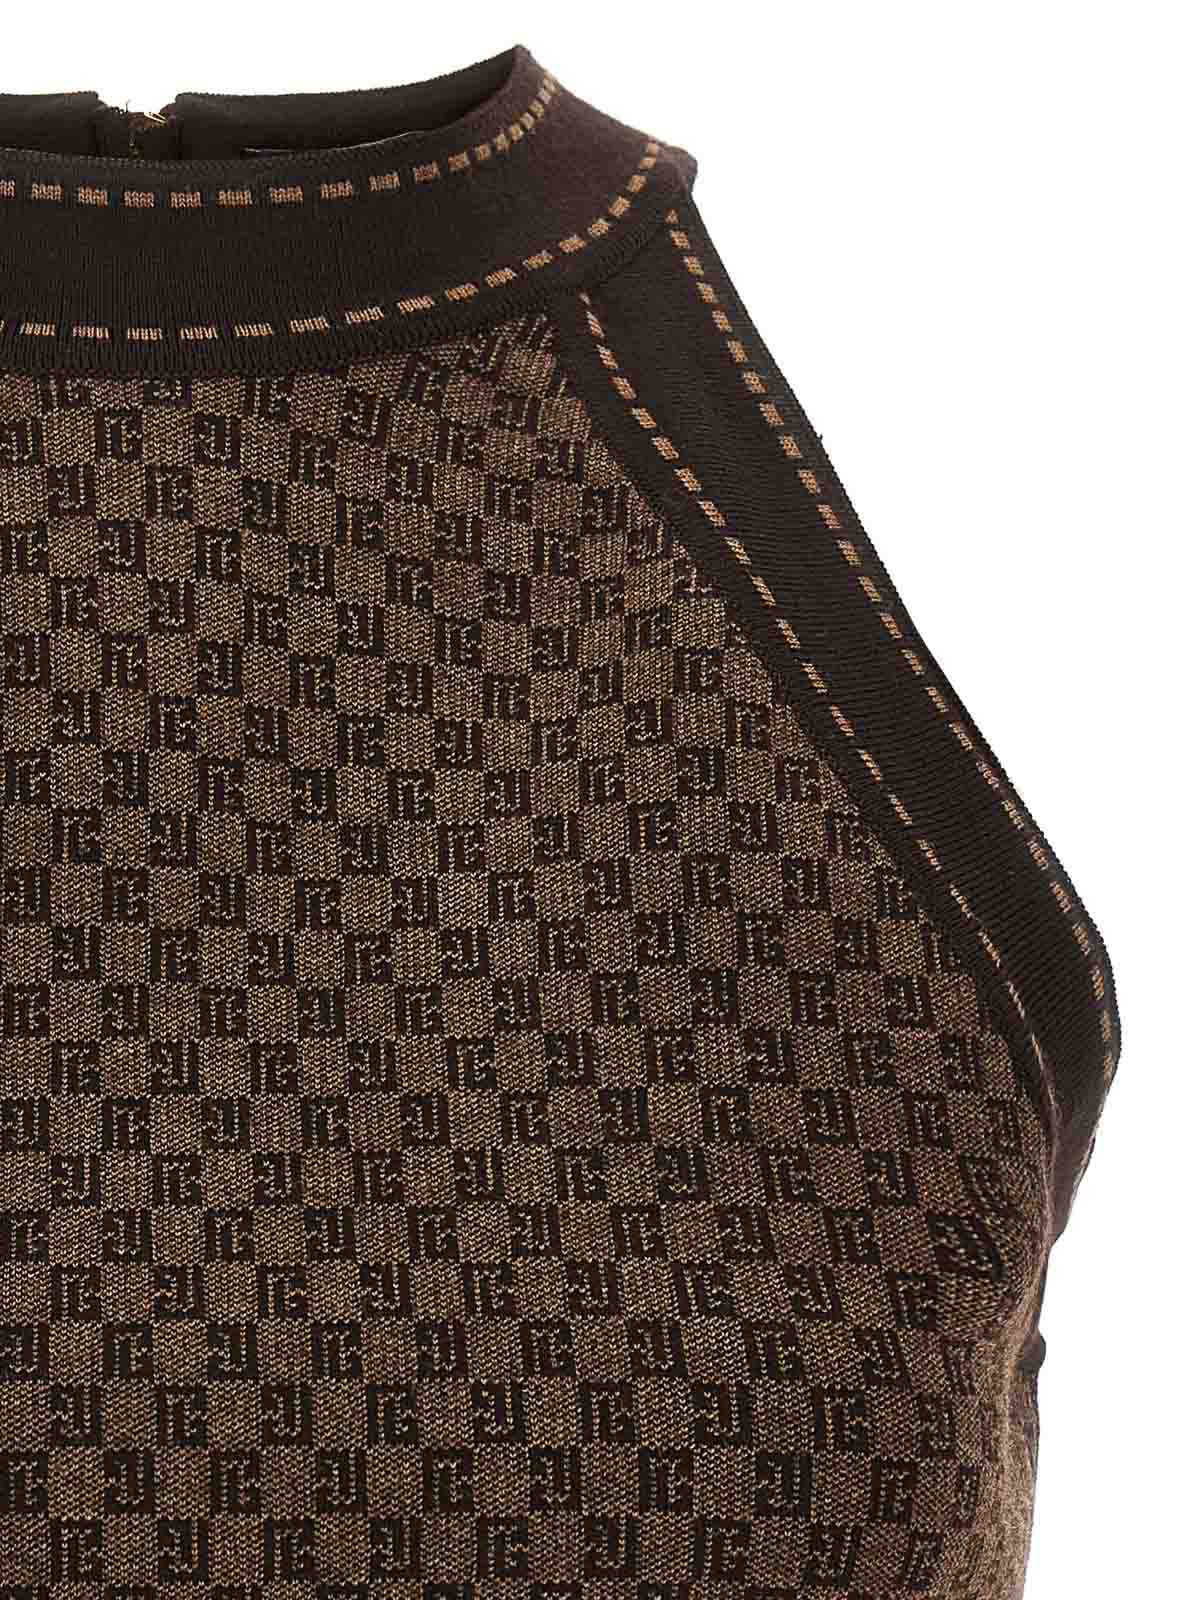 Balmain Monogram Technical Wool Cropped Top